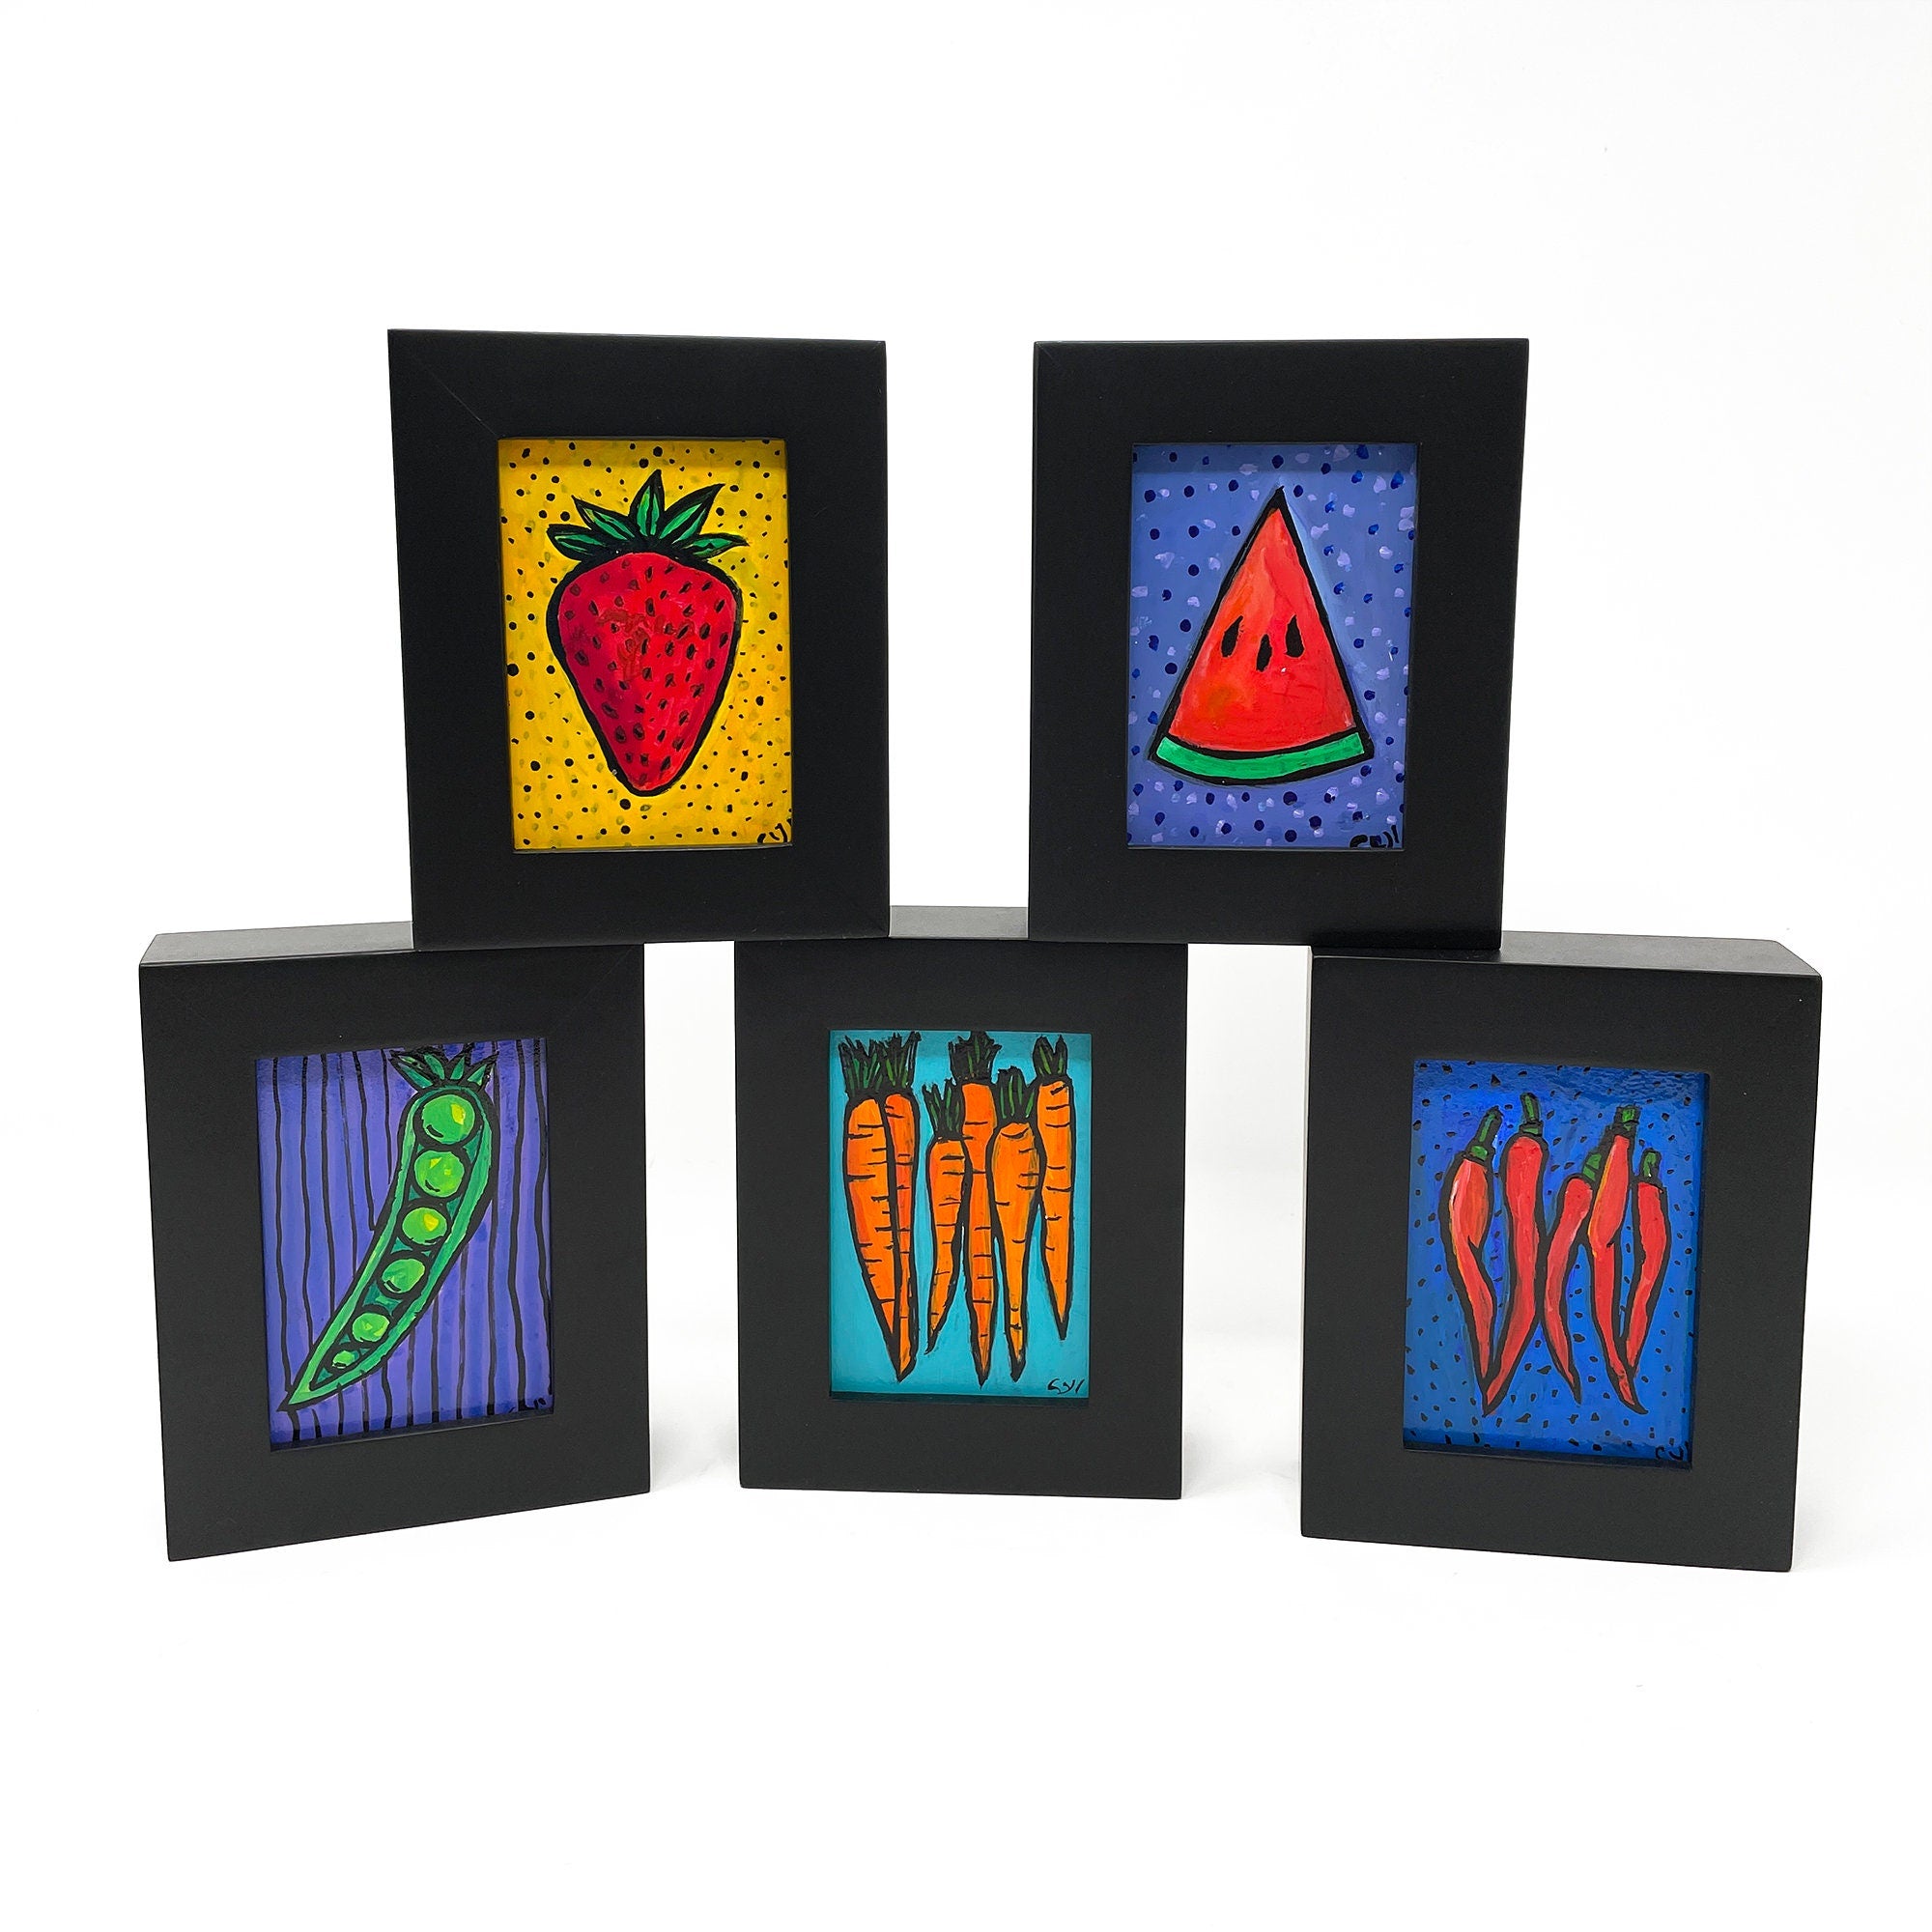 Mini Strawberry Painting - Small Original Art in Frame - Fresh Fruit, Food, Kitchen Wall or Shelf Art